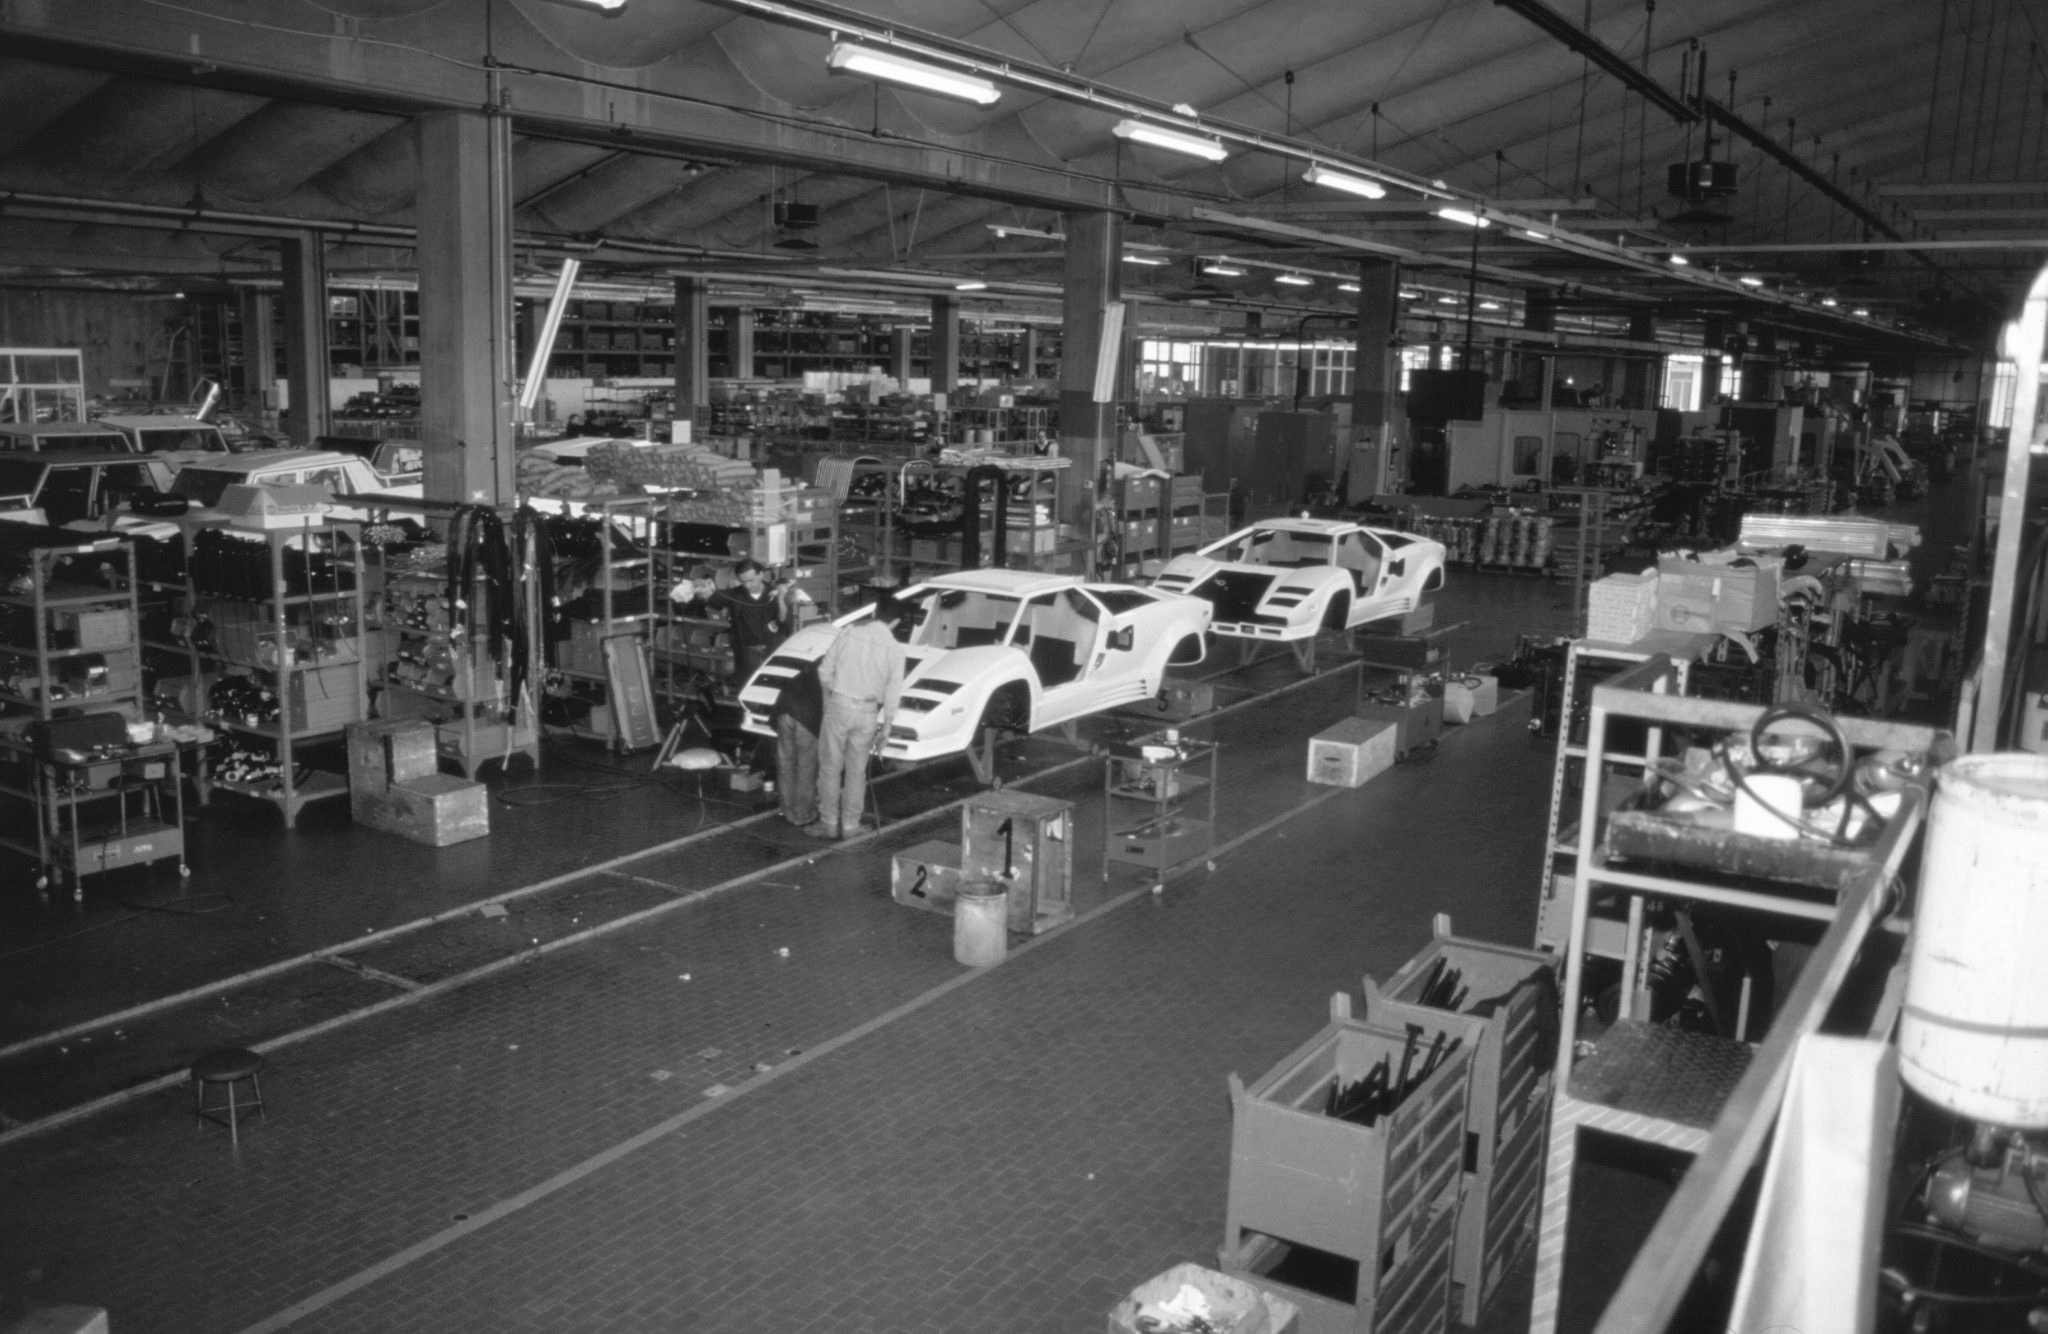 1988 Lamborghini Factory Countach Construction BW 534251494 2048x1334 1